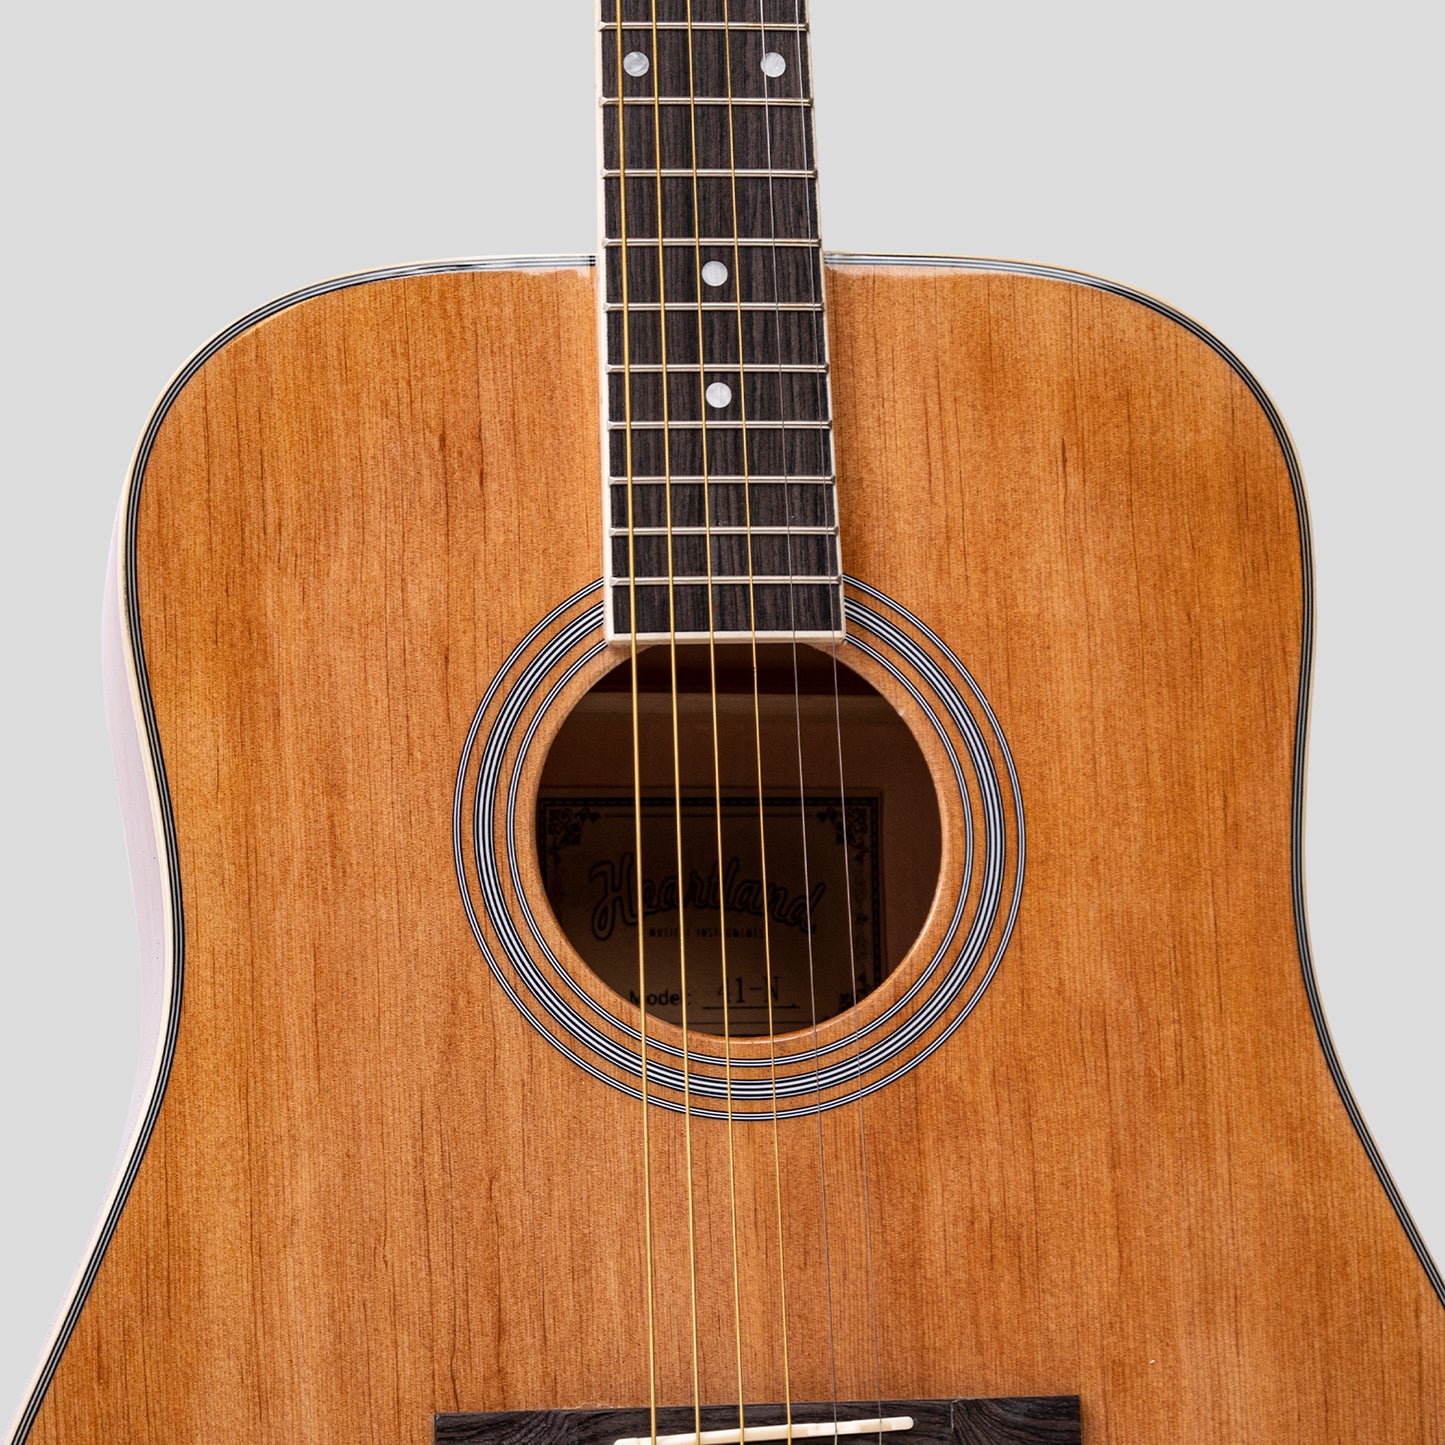 Heartland Spirit Dreadnought Steel String Guitar Kit Natural